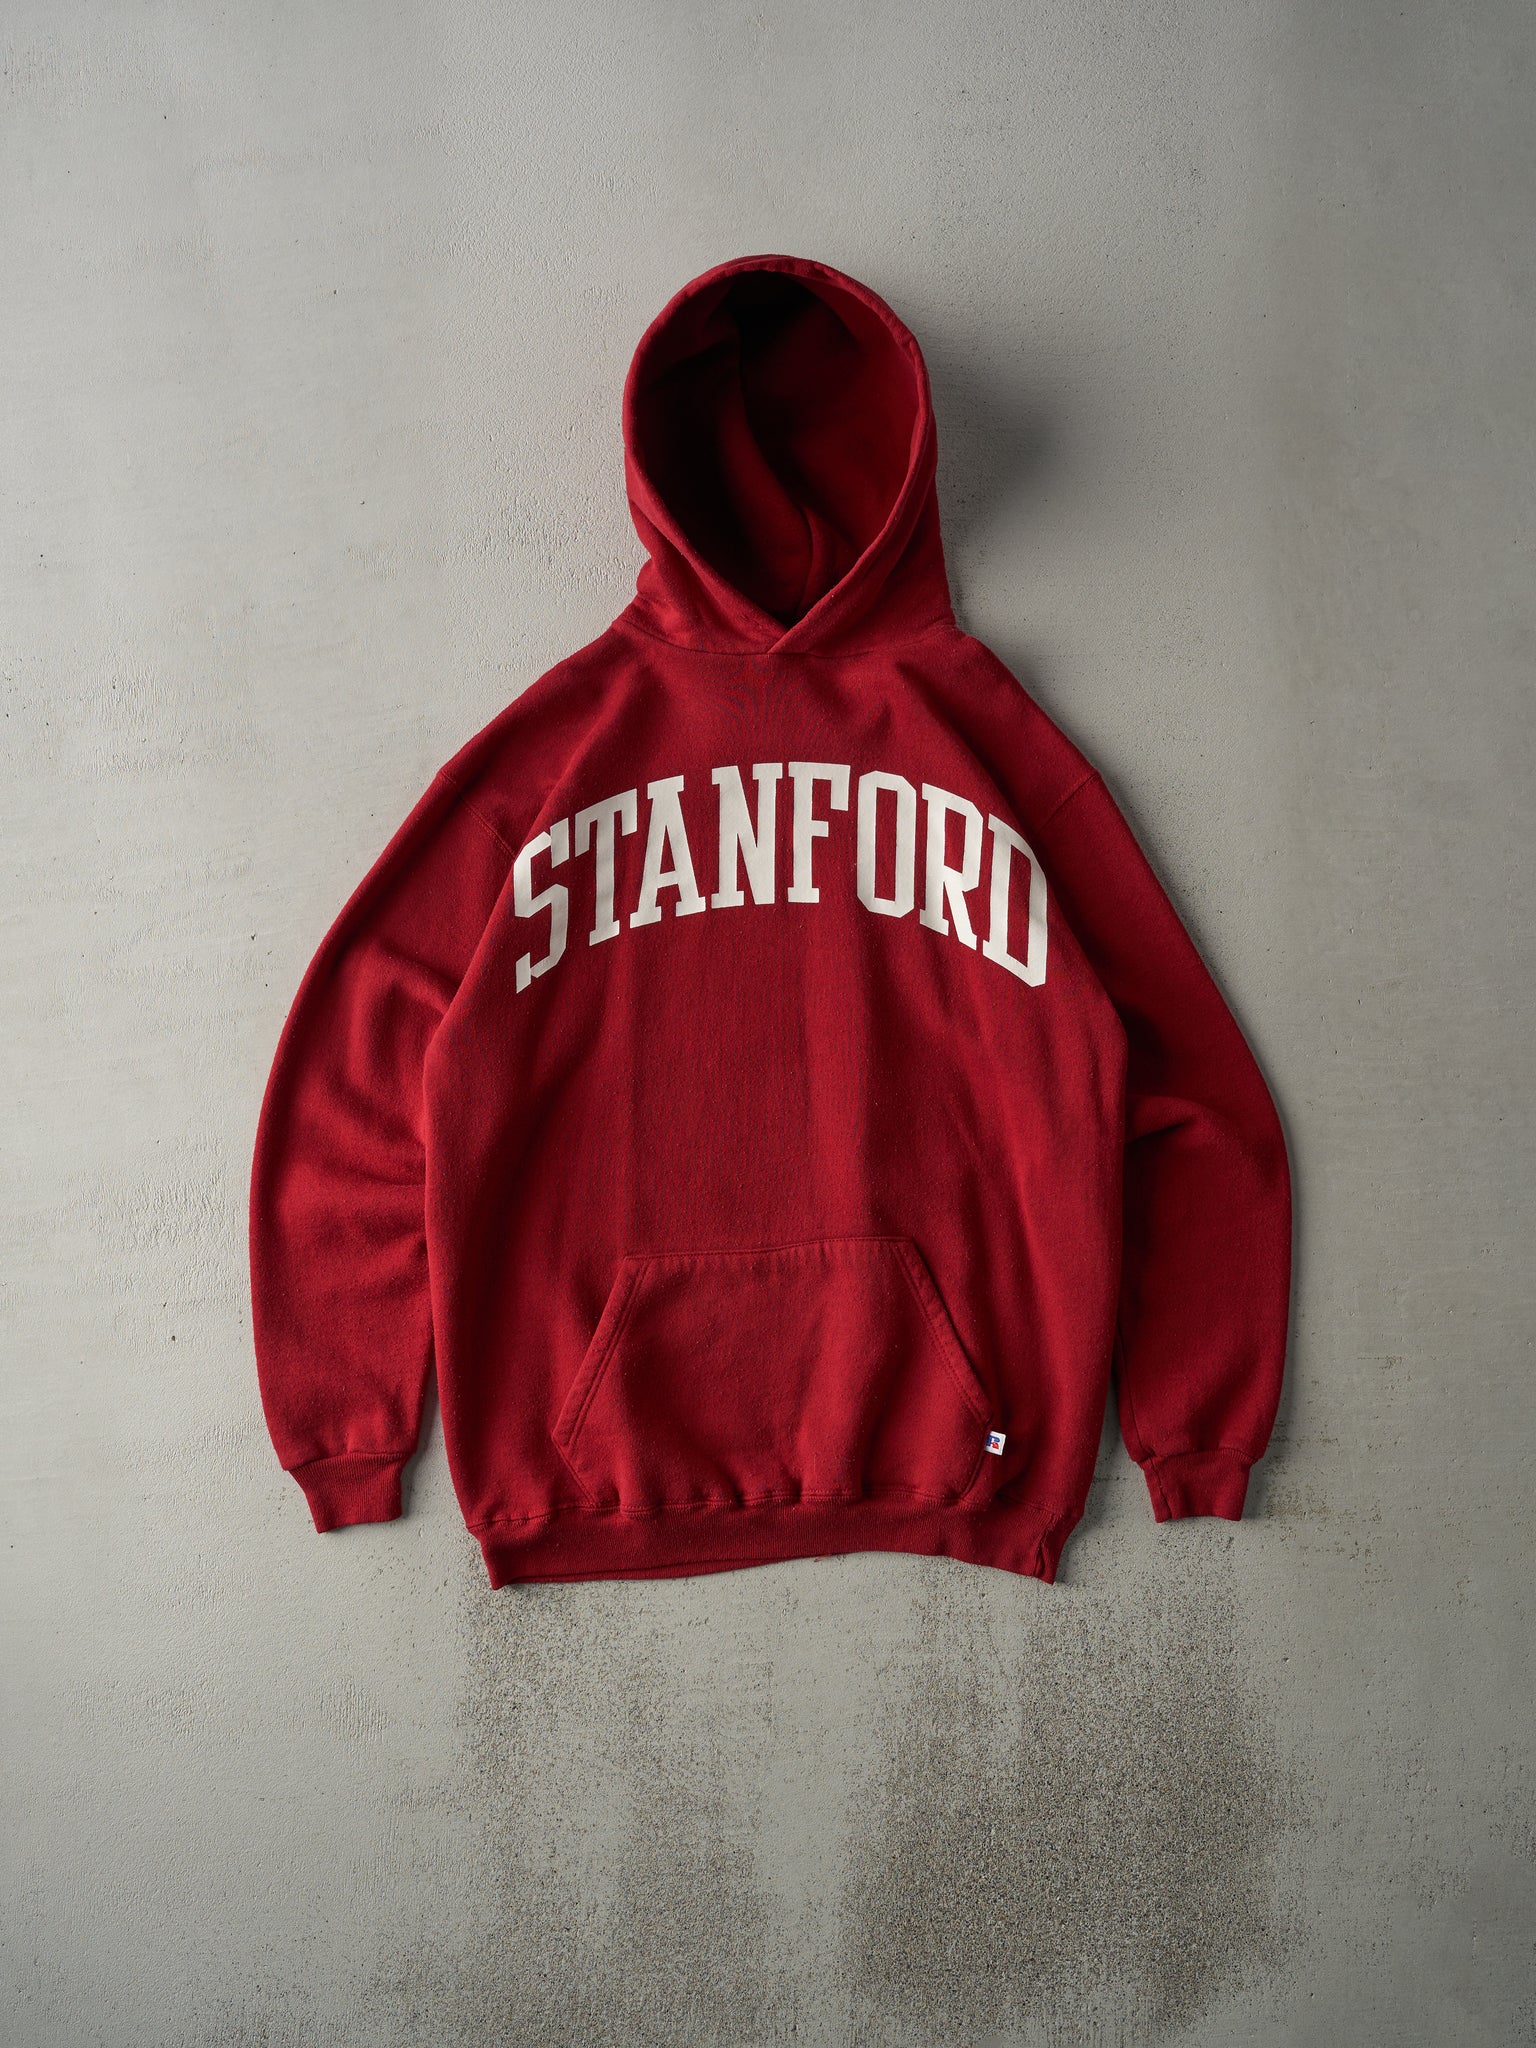 Vintage 90s Red Russell Athletics Stanford University Hoodie (M)